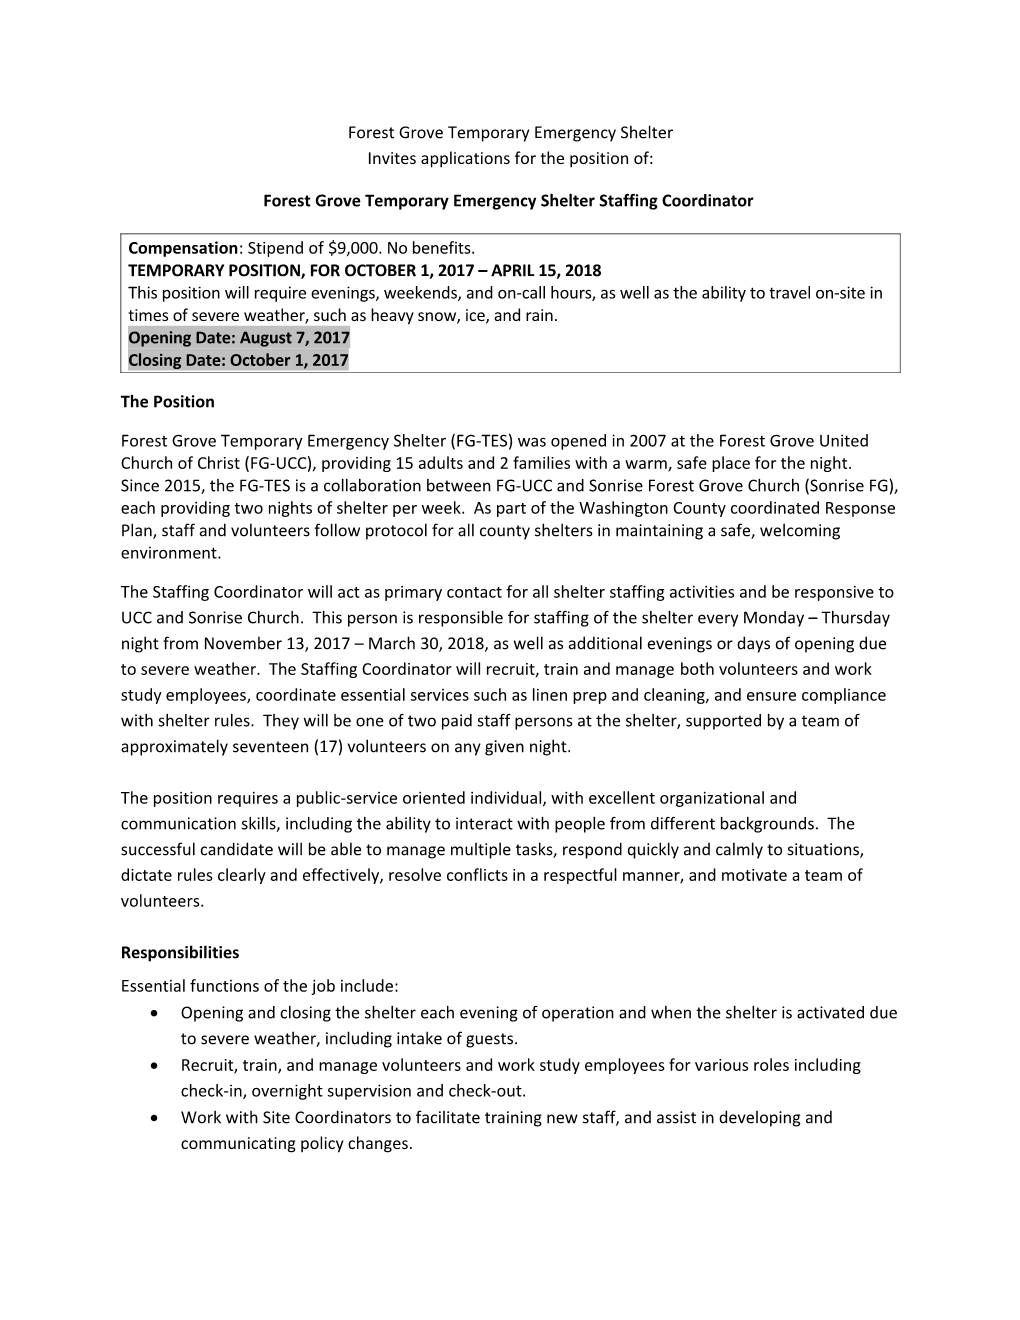 Forest Grove Temporary Emergency Shelter Staffing Coordinator Position Description